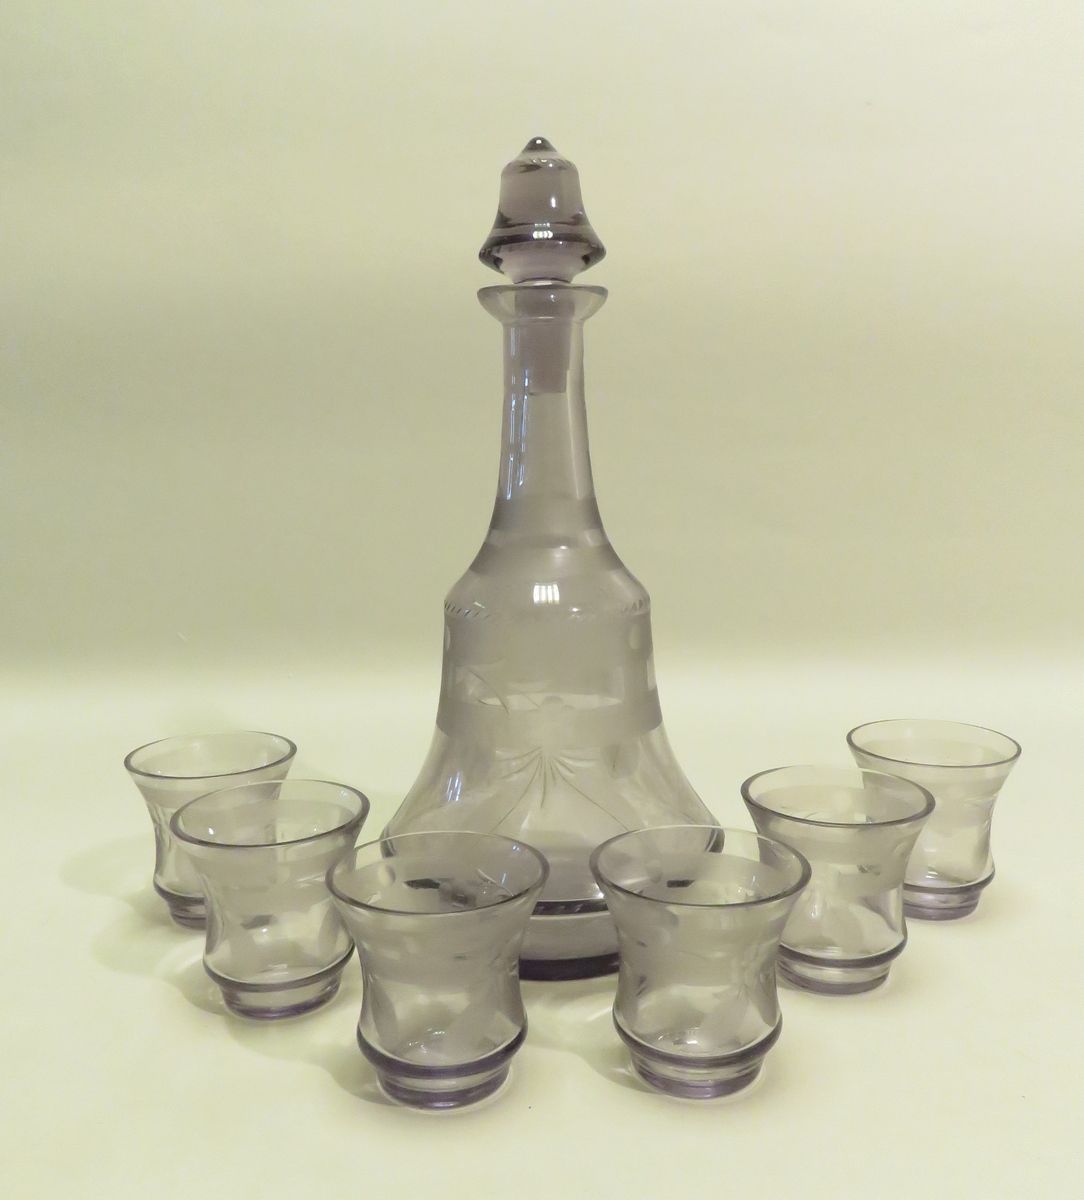 Null 吹制玻璃器皿（捷克斯洛伐克），由七件组成。-6个杯子/杯。7.5 x 7厘米；-1个玻璃杯和塞子。31.5 x 15厘米。